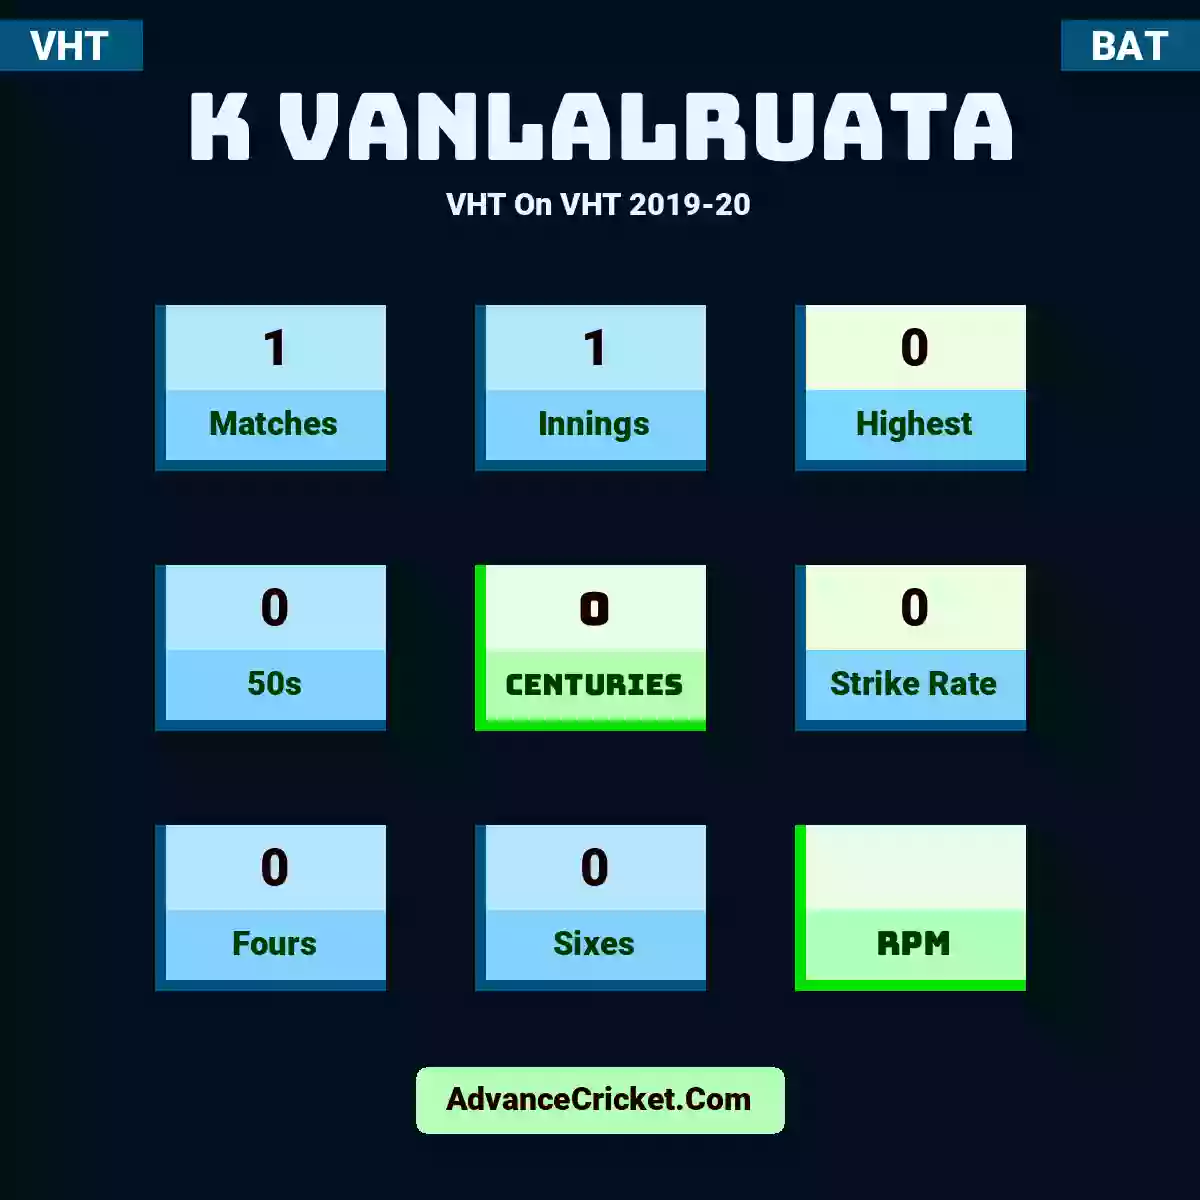 K Vanlalruata VHT  On VHT 2019-20, K Vanlalruata played 1 matches, scored 0 runs as highest, 0 half-centuries, and 0 centuries, with a strike rate of 0. K.Vanlalruata hit 0 fours and 0 sixes.